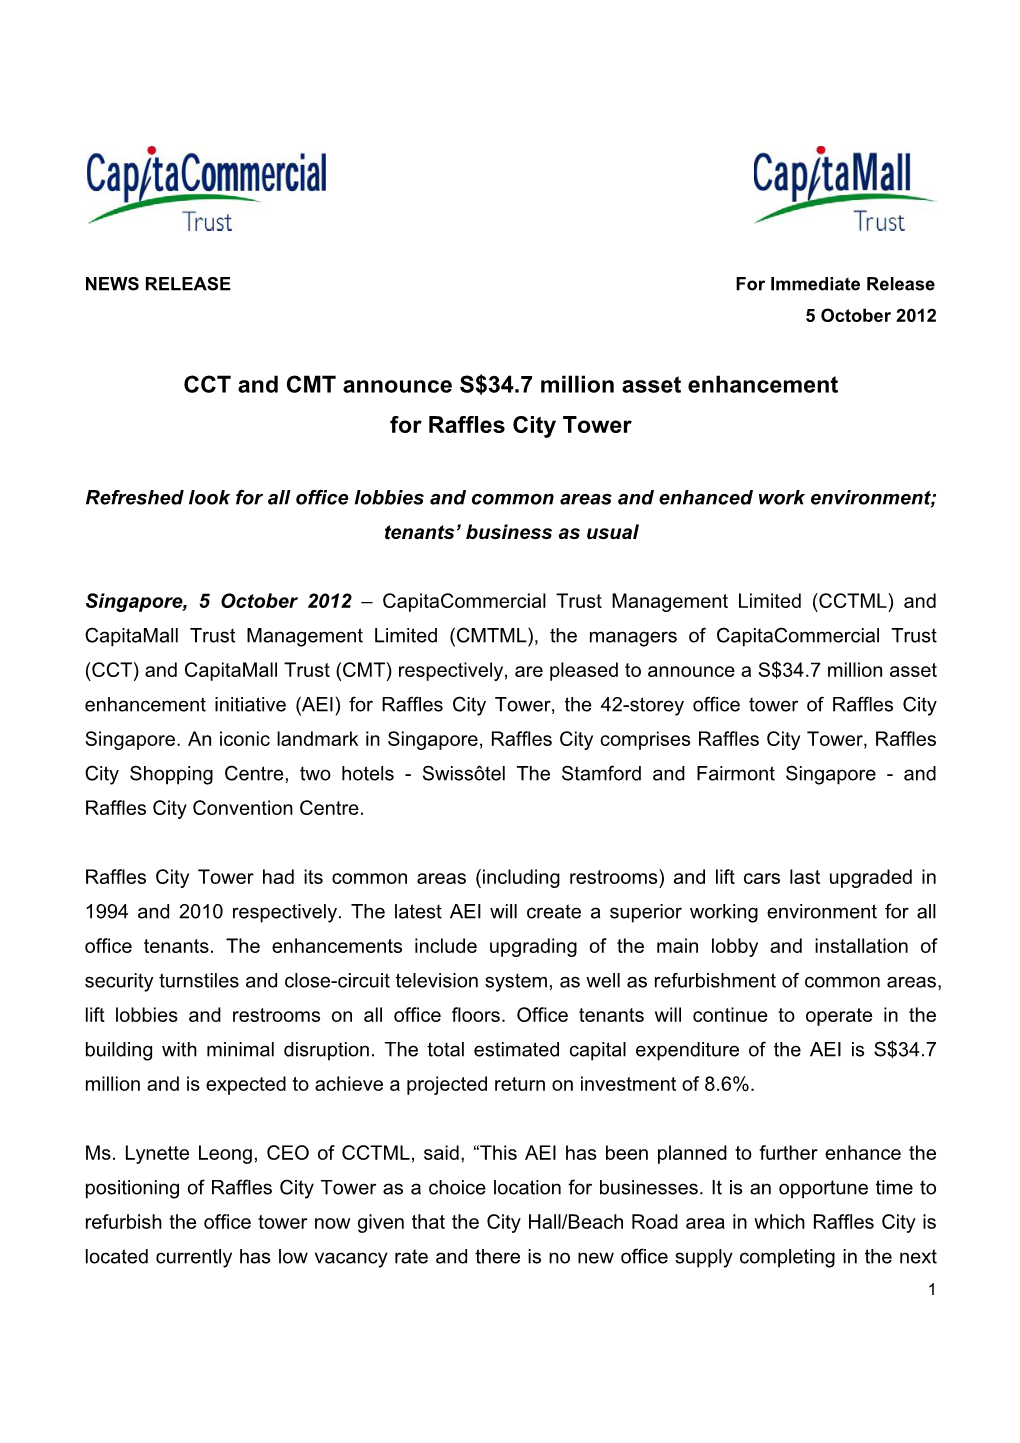 CCT and CMT Announce S$34.7 Million Asset Enhancement for Raffles City Tower